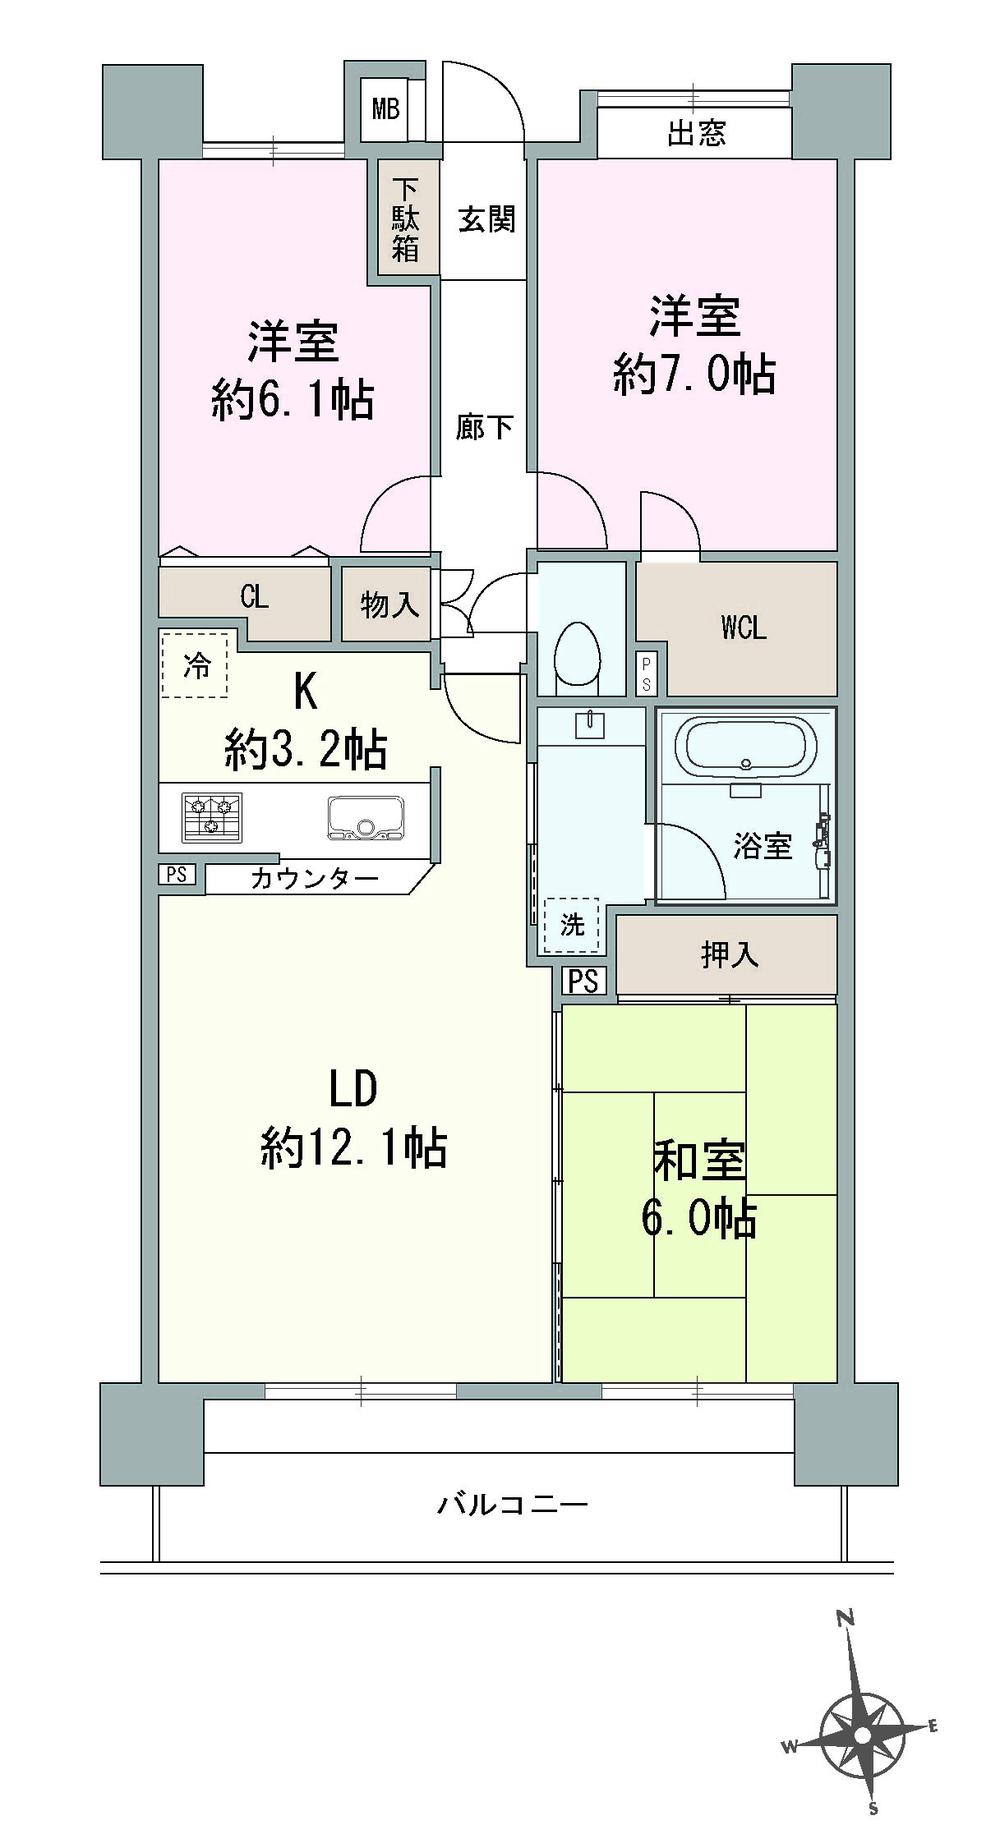 Floor plan. 3LDK, Price 16.8 million yen, Footprint 75.6 sq m , Balcony area 12.6 sq m